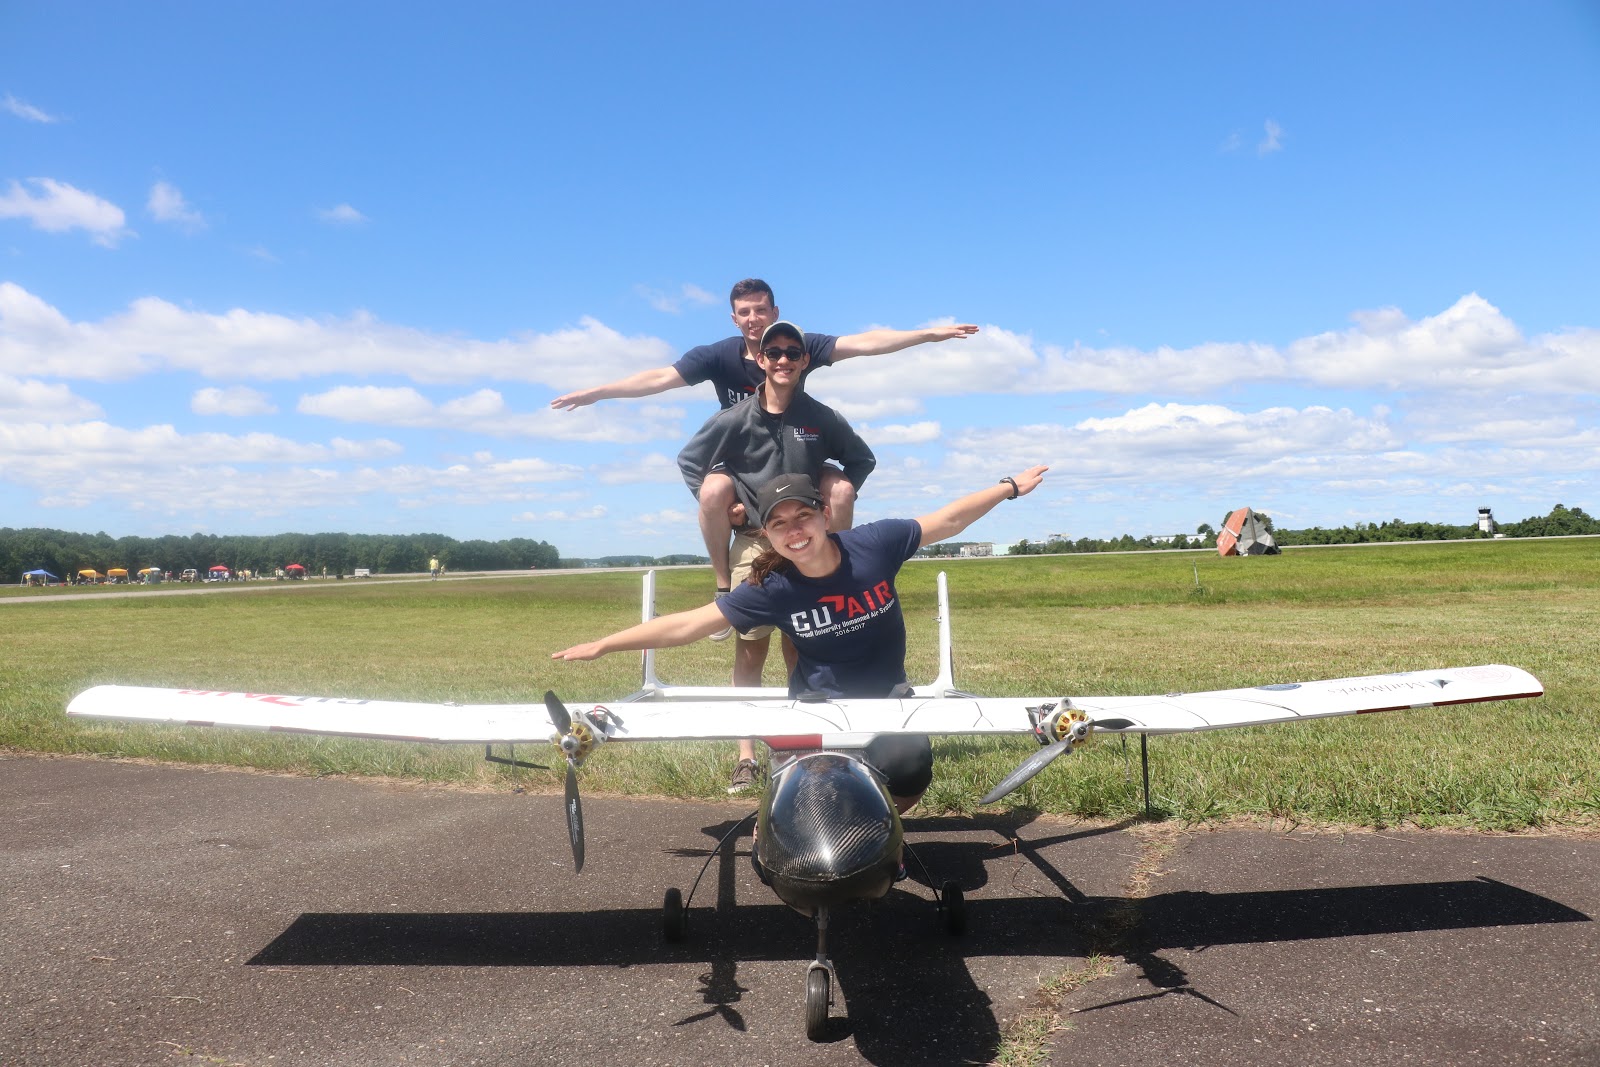 CUAir_Members of the CUAir team with their autonomous unmanned aircraft